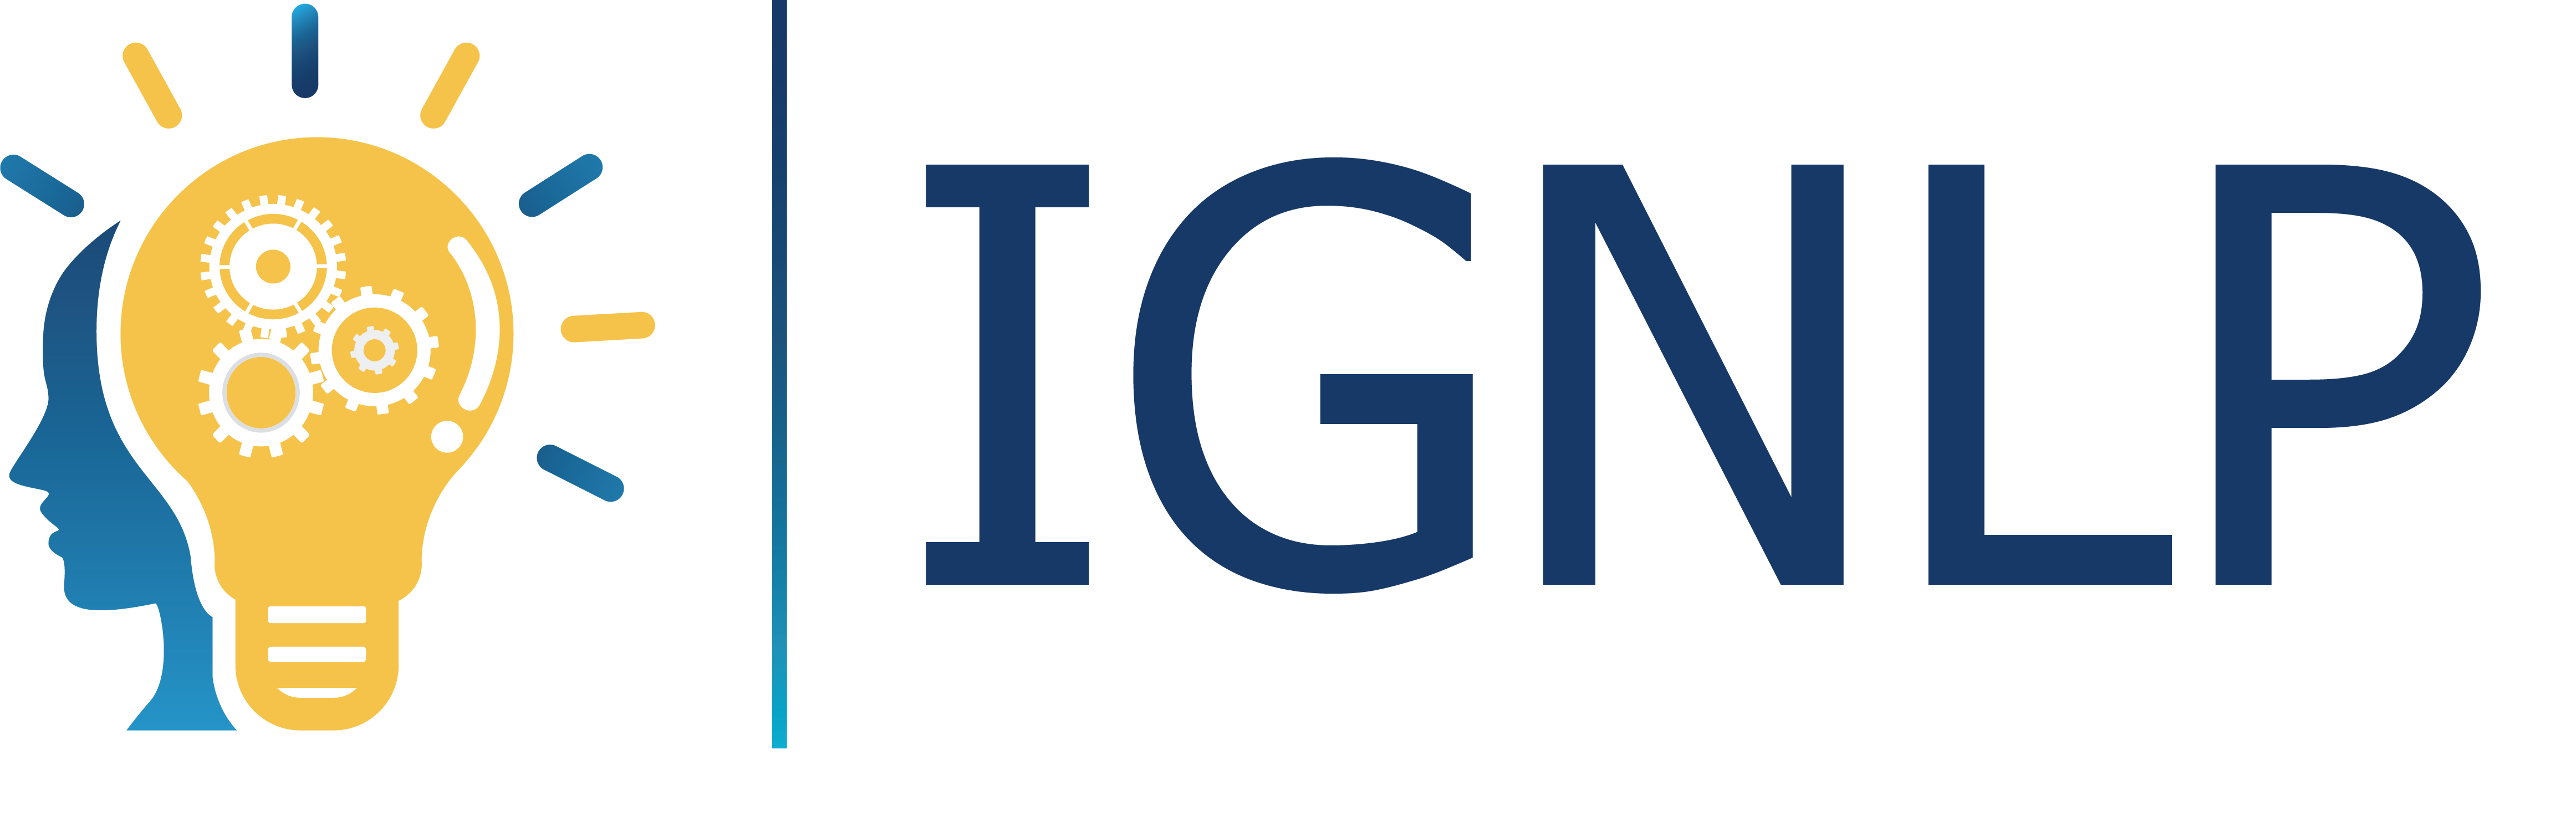 IGNLP logo